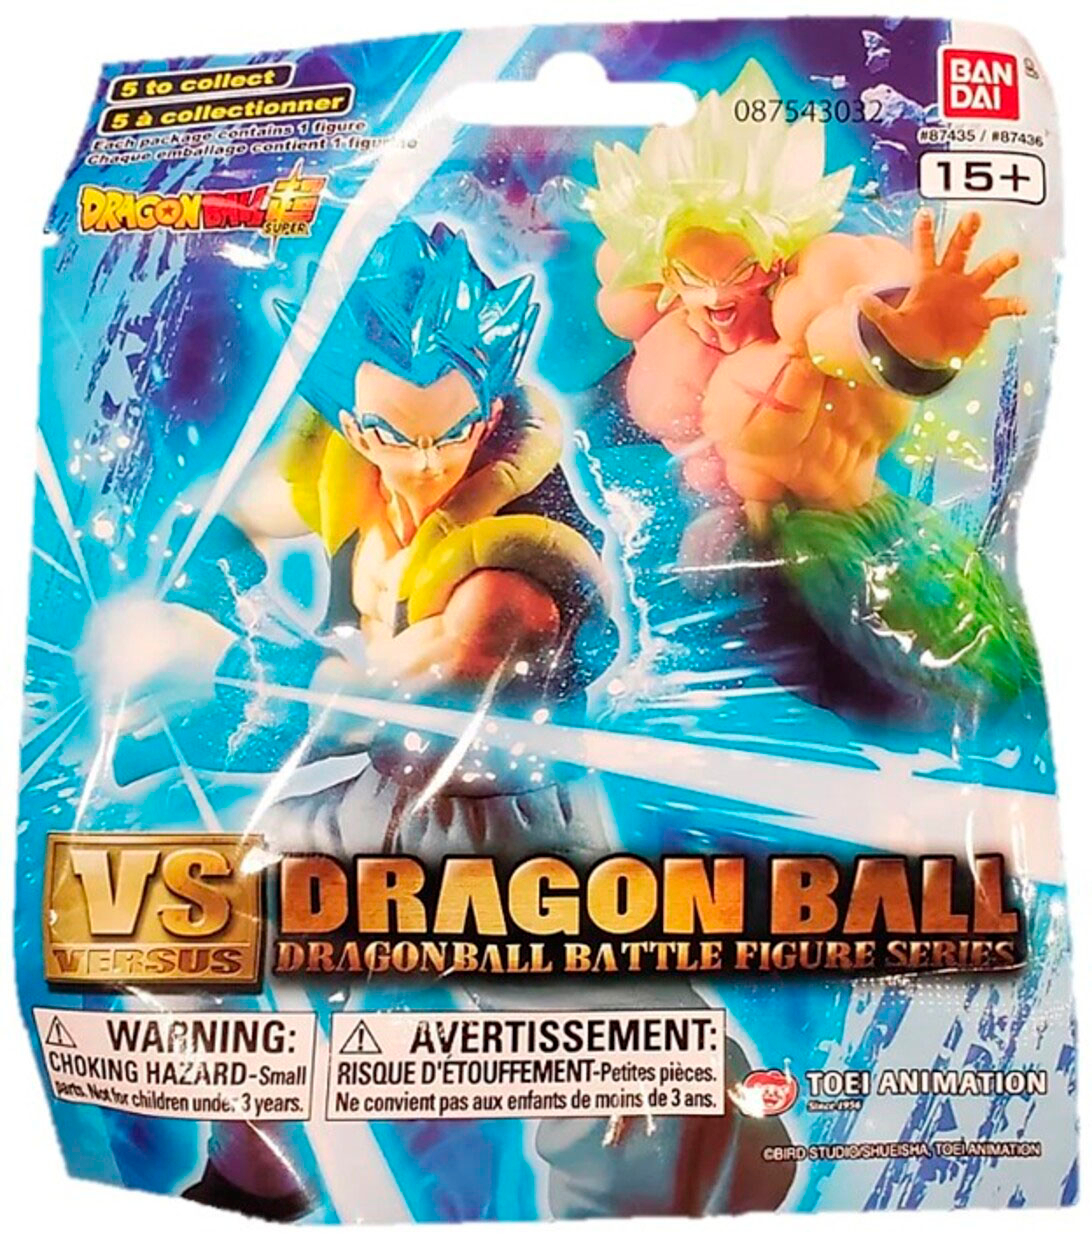  Dragon Ball Super - Dragon Stars Goku Black Figure (Series 8) :  Toys & Games